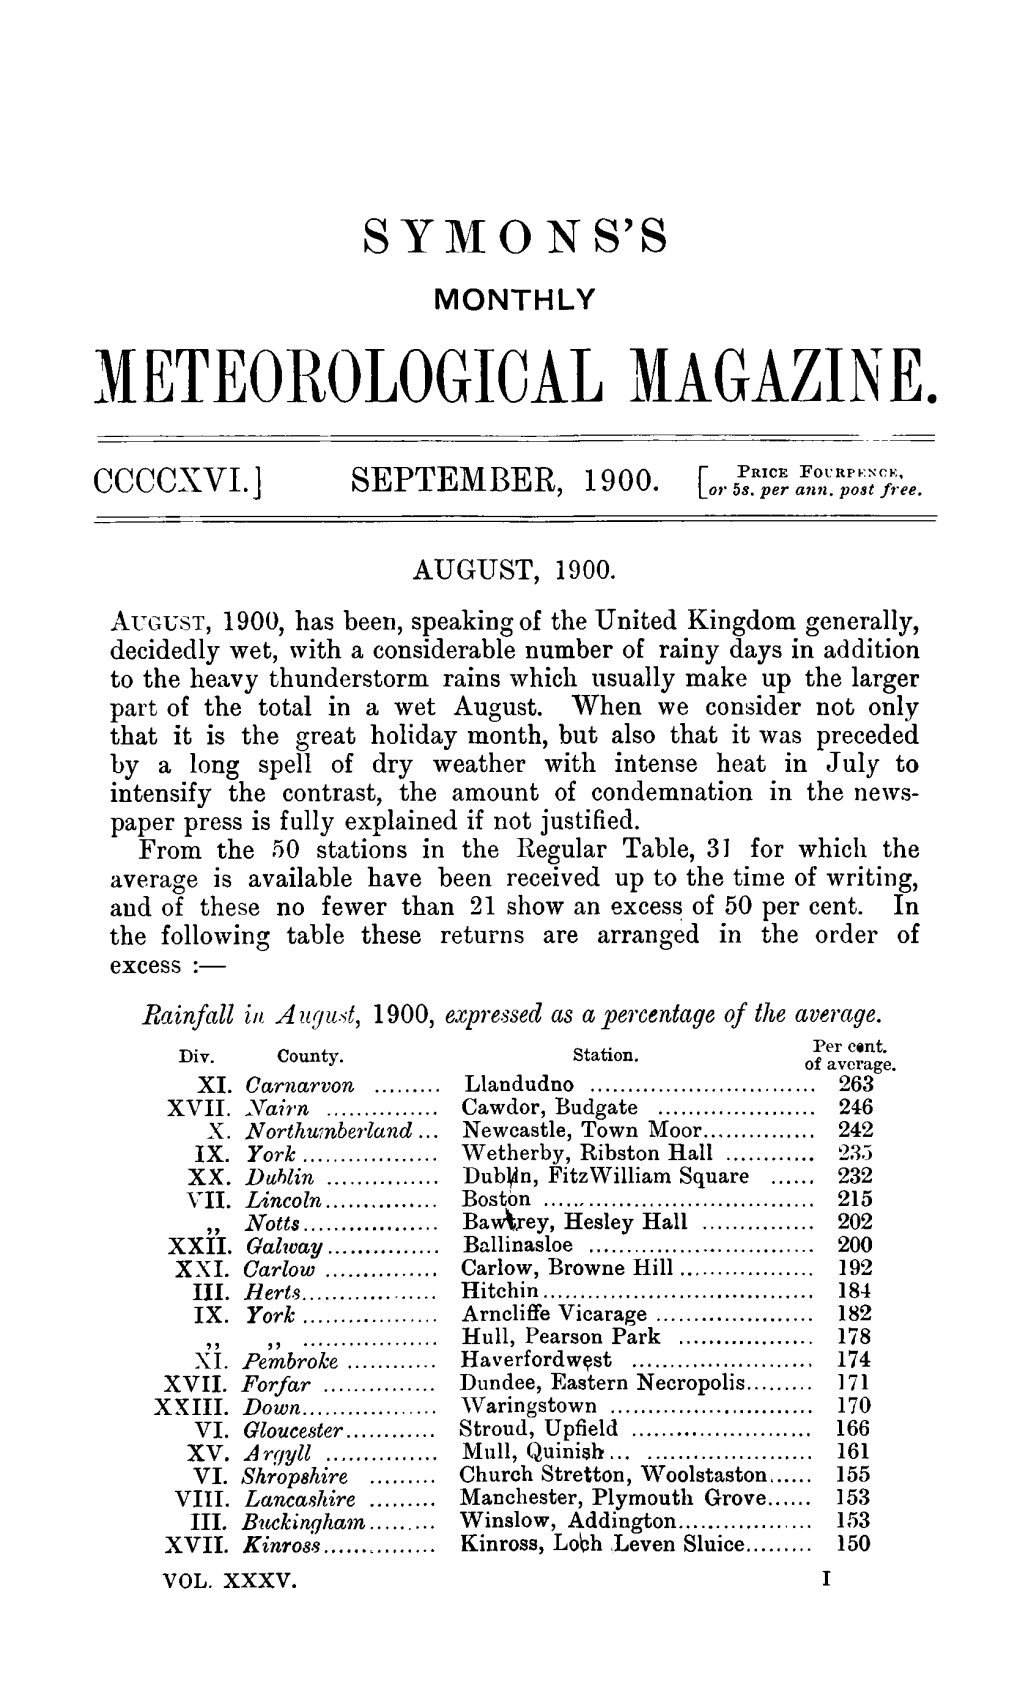 Meteorological Magazine